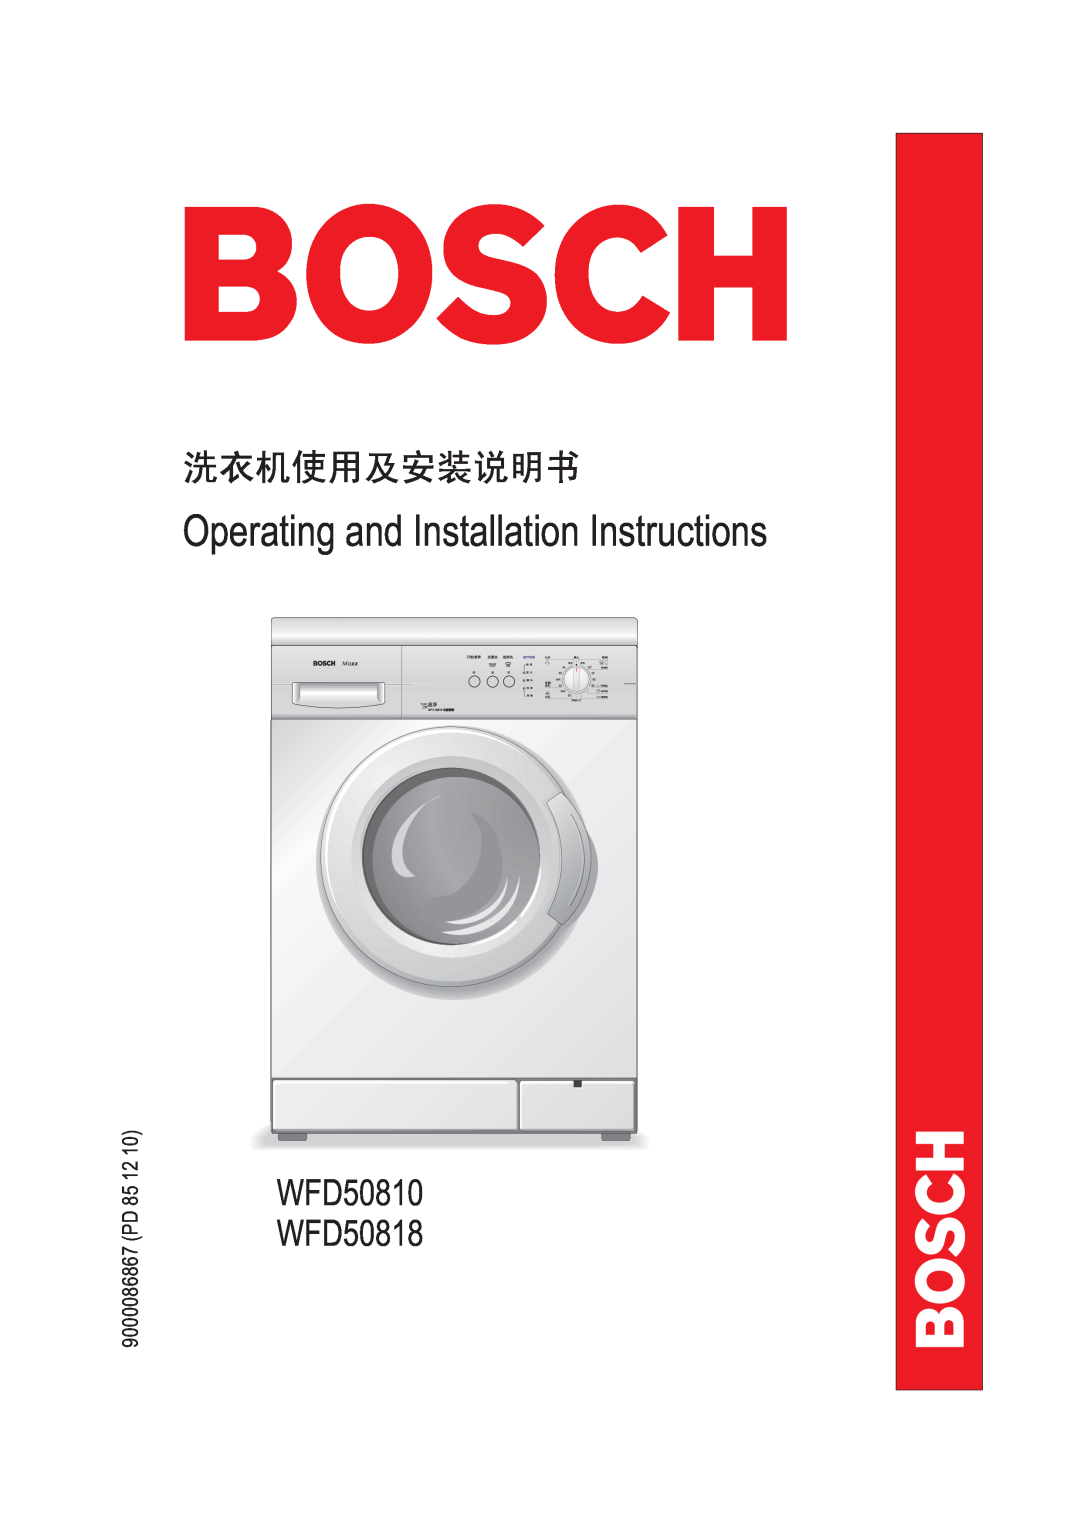 Bosch Appliances installation instructions Operating and Installation Instructions, WFD50810 WFD50818 